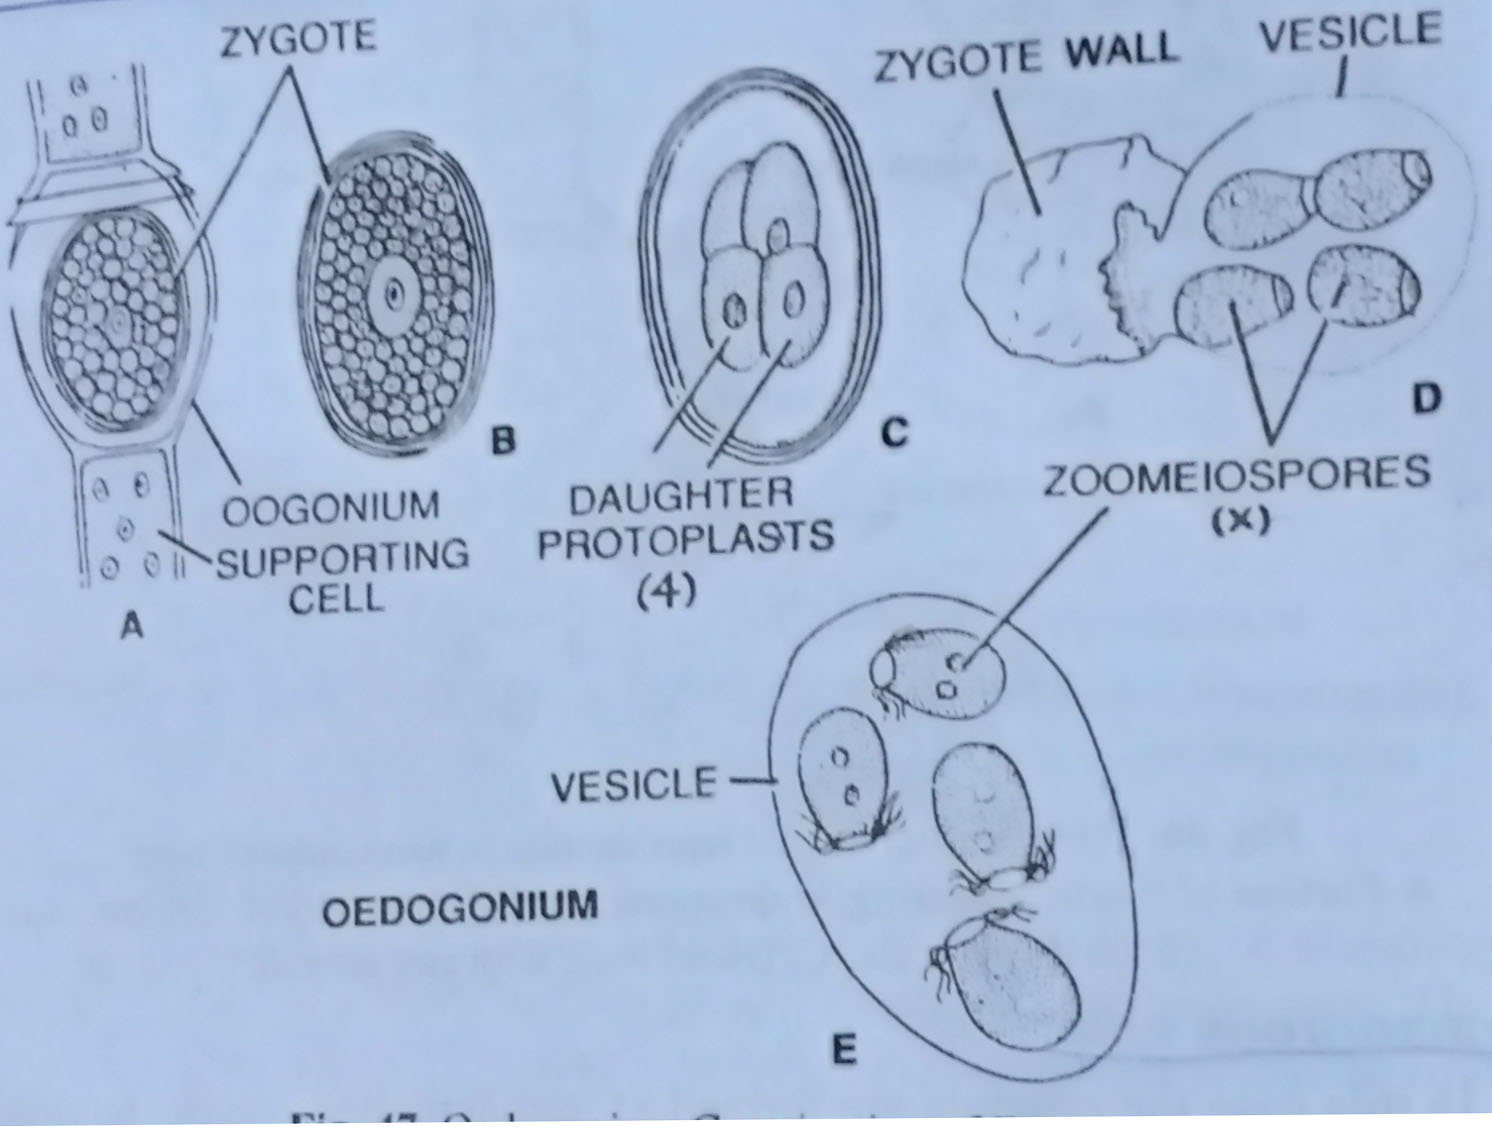 Oedogonium Germination of Zyogte